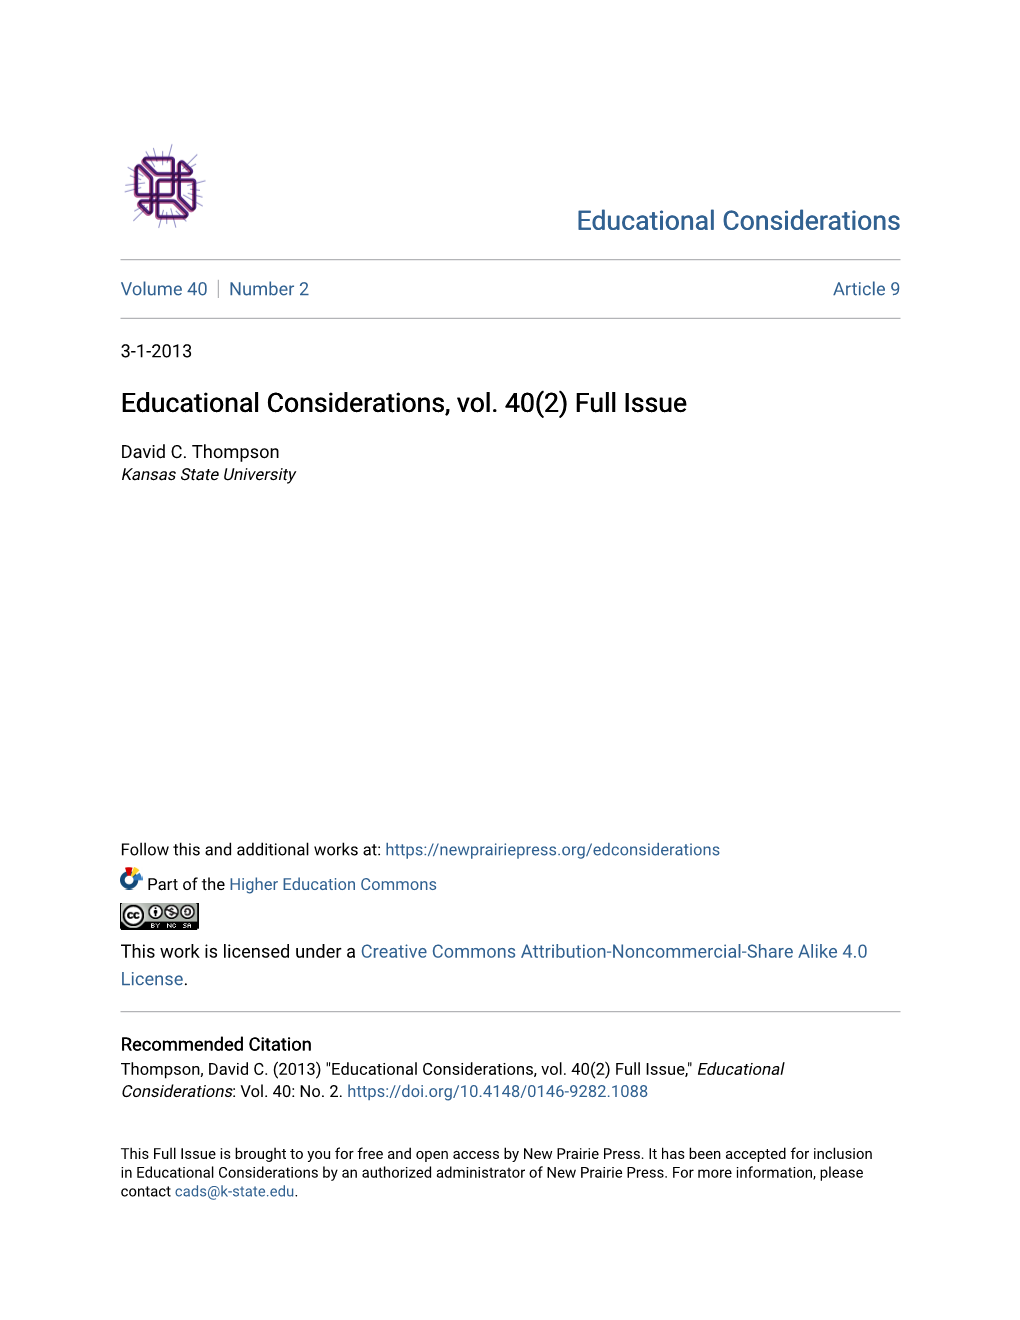 Educational Considerations, Vol. 40(2) Full Issue